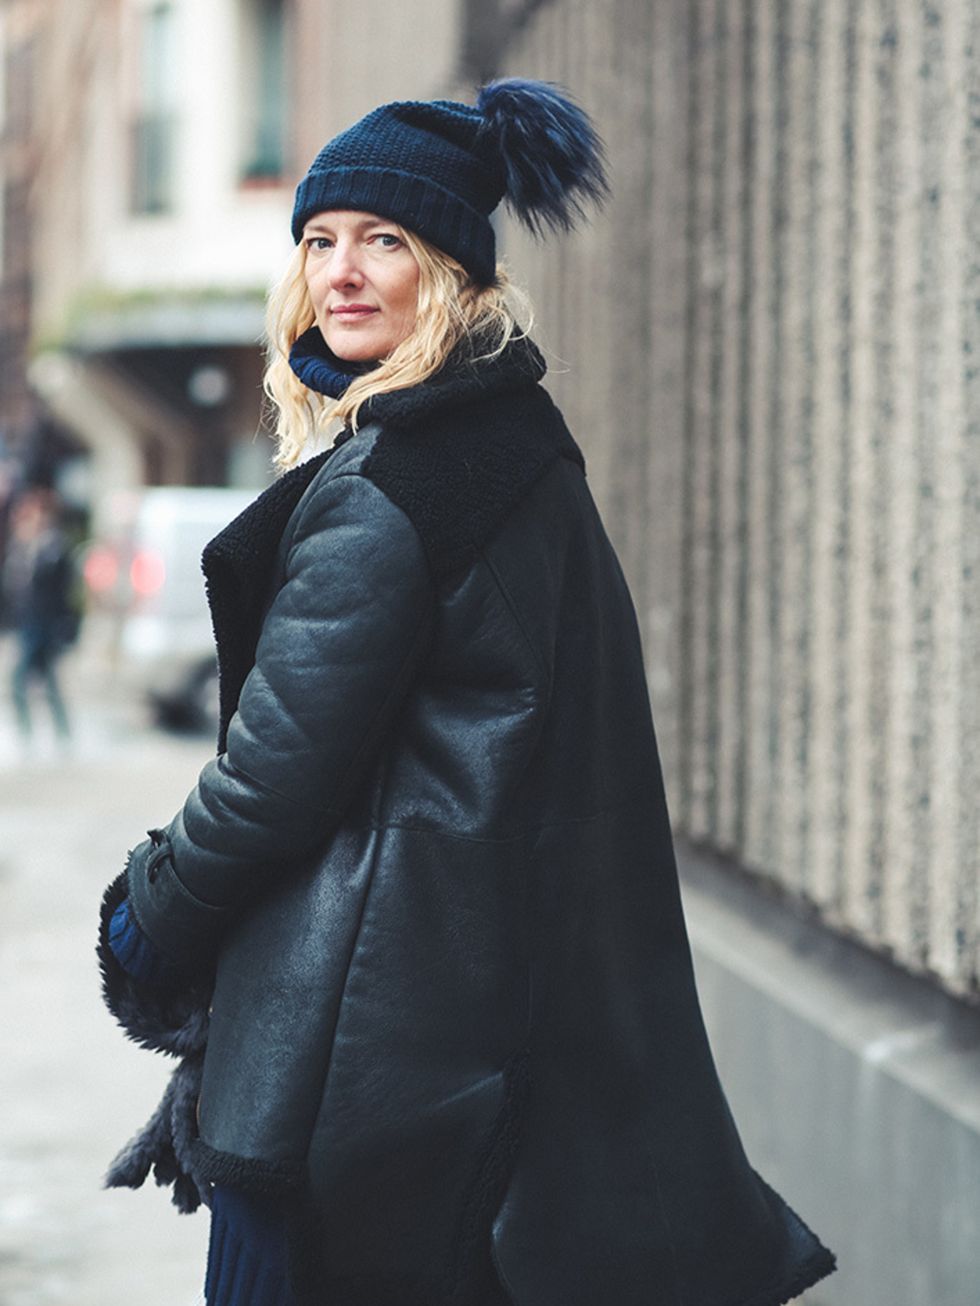 <p>Rebecca Lowthorpe  ELLE Collections Editor/Assistant Editor ELLE.</p>

<p>Inverni hat, Preen coat and Margiela for H&M jumper dress. </p>